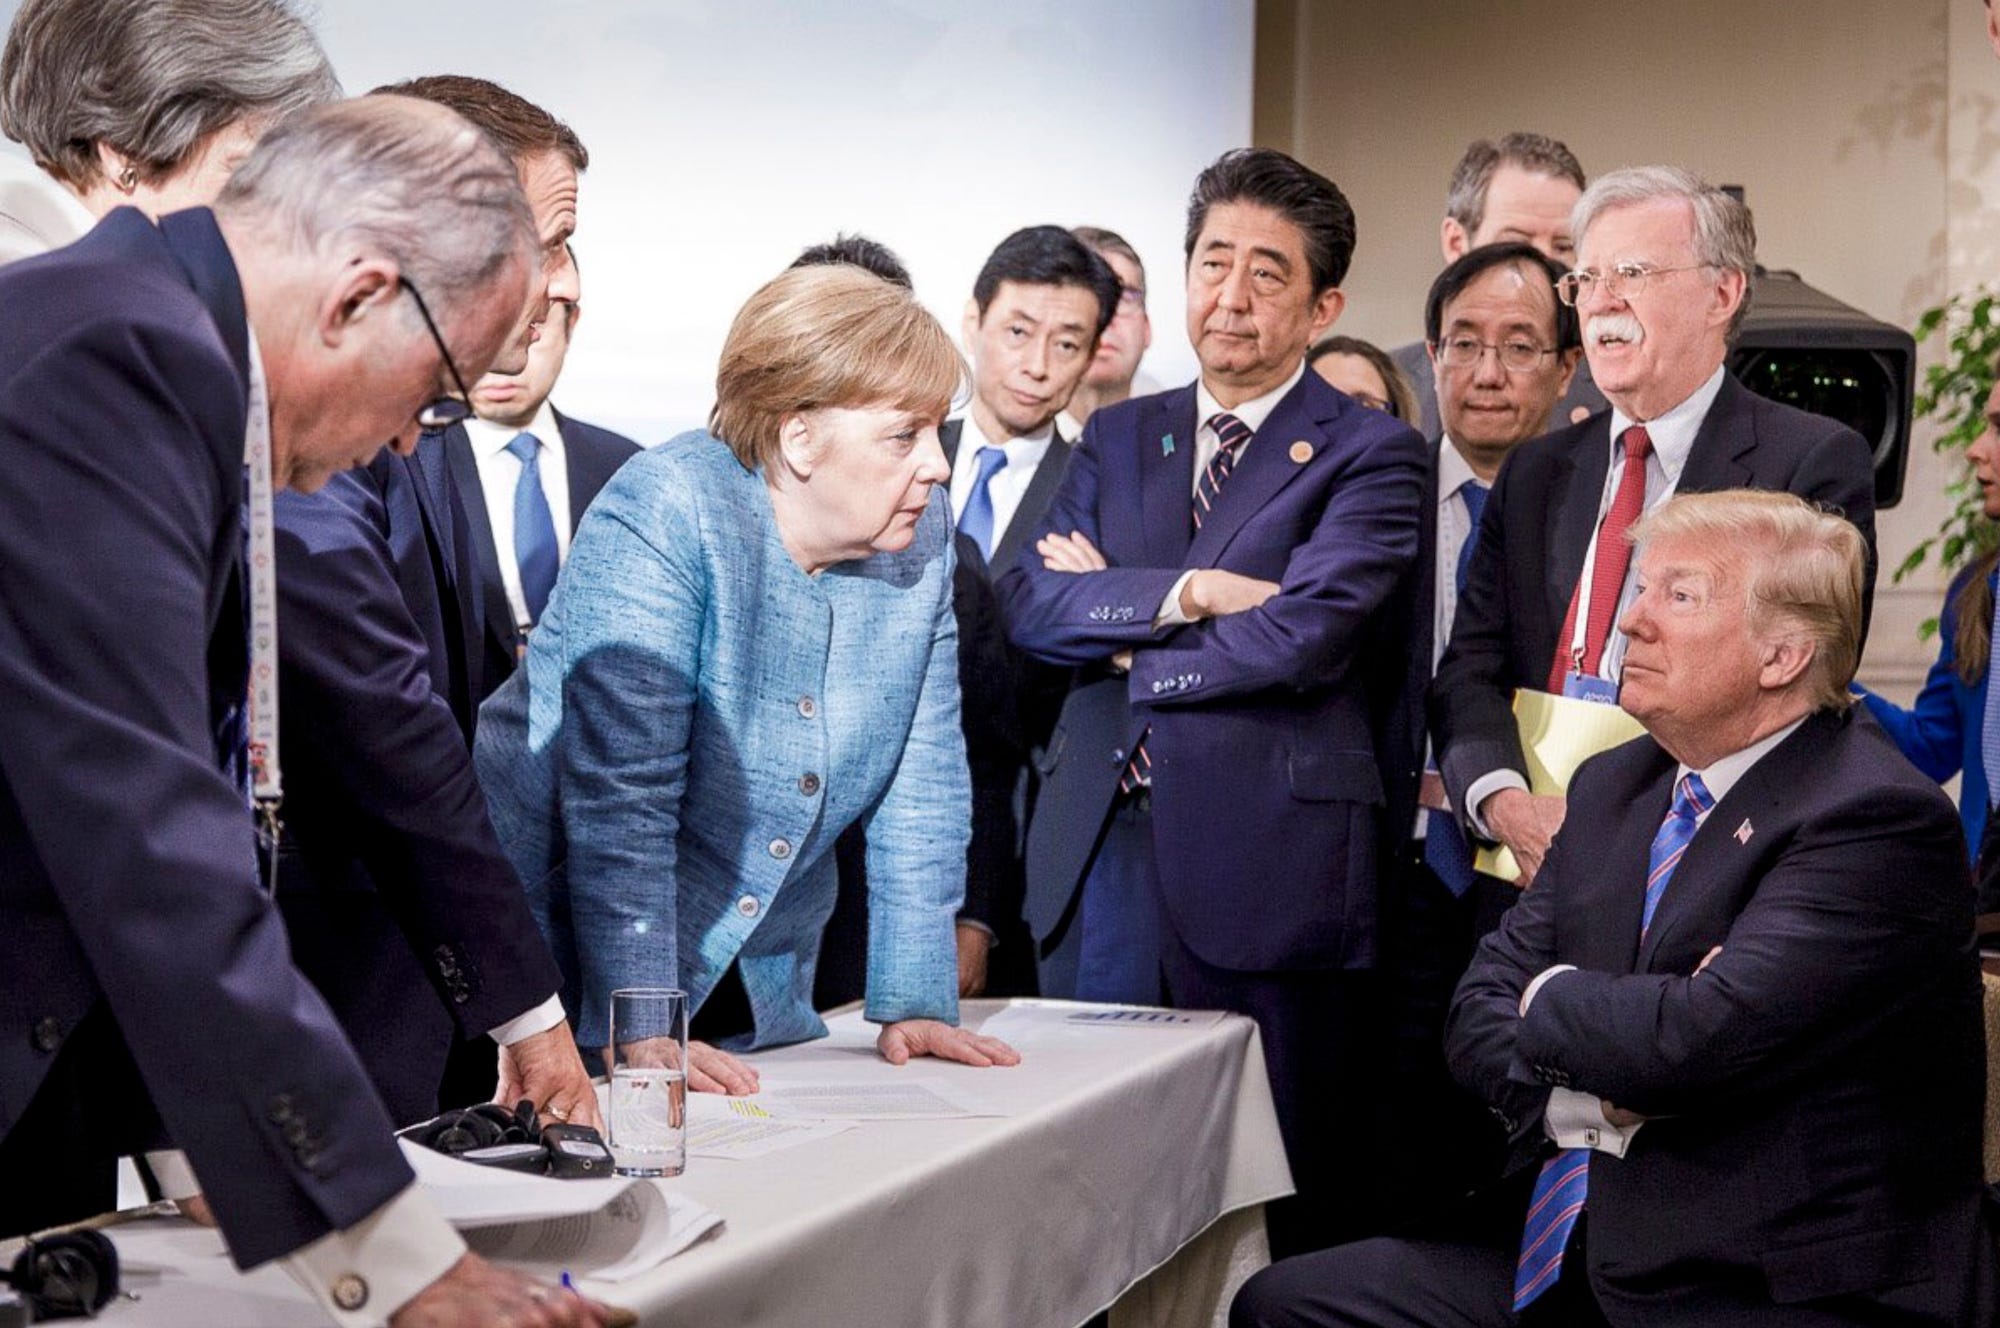 De Duitse bondskanselier Angela Merkel spreekt Donald Trump toe tijdens een G7-top in Canada in 2018. Foto: Jesco Denzel via AP